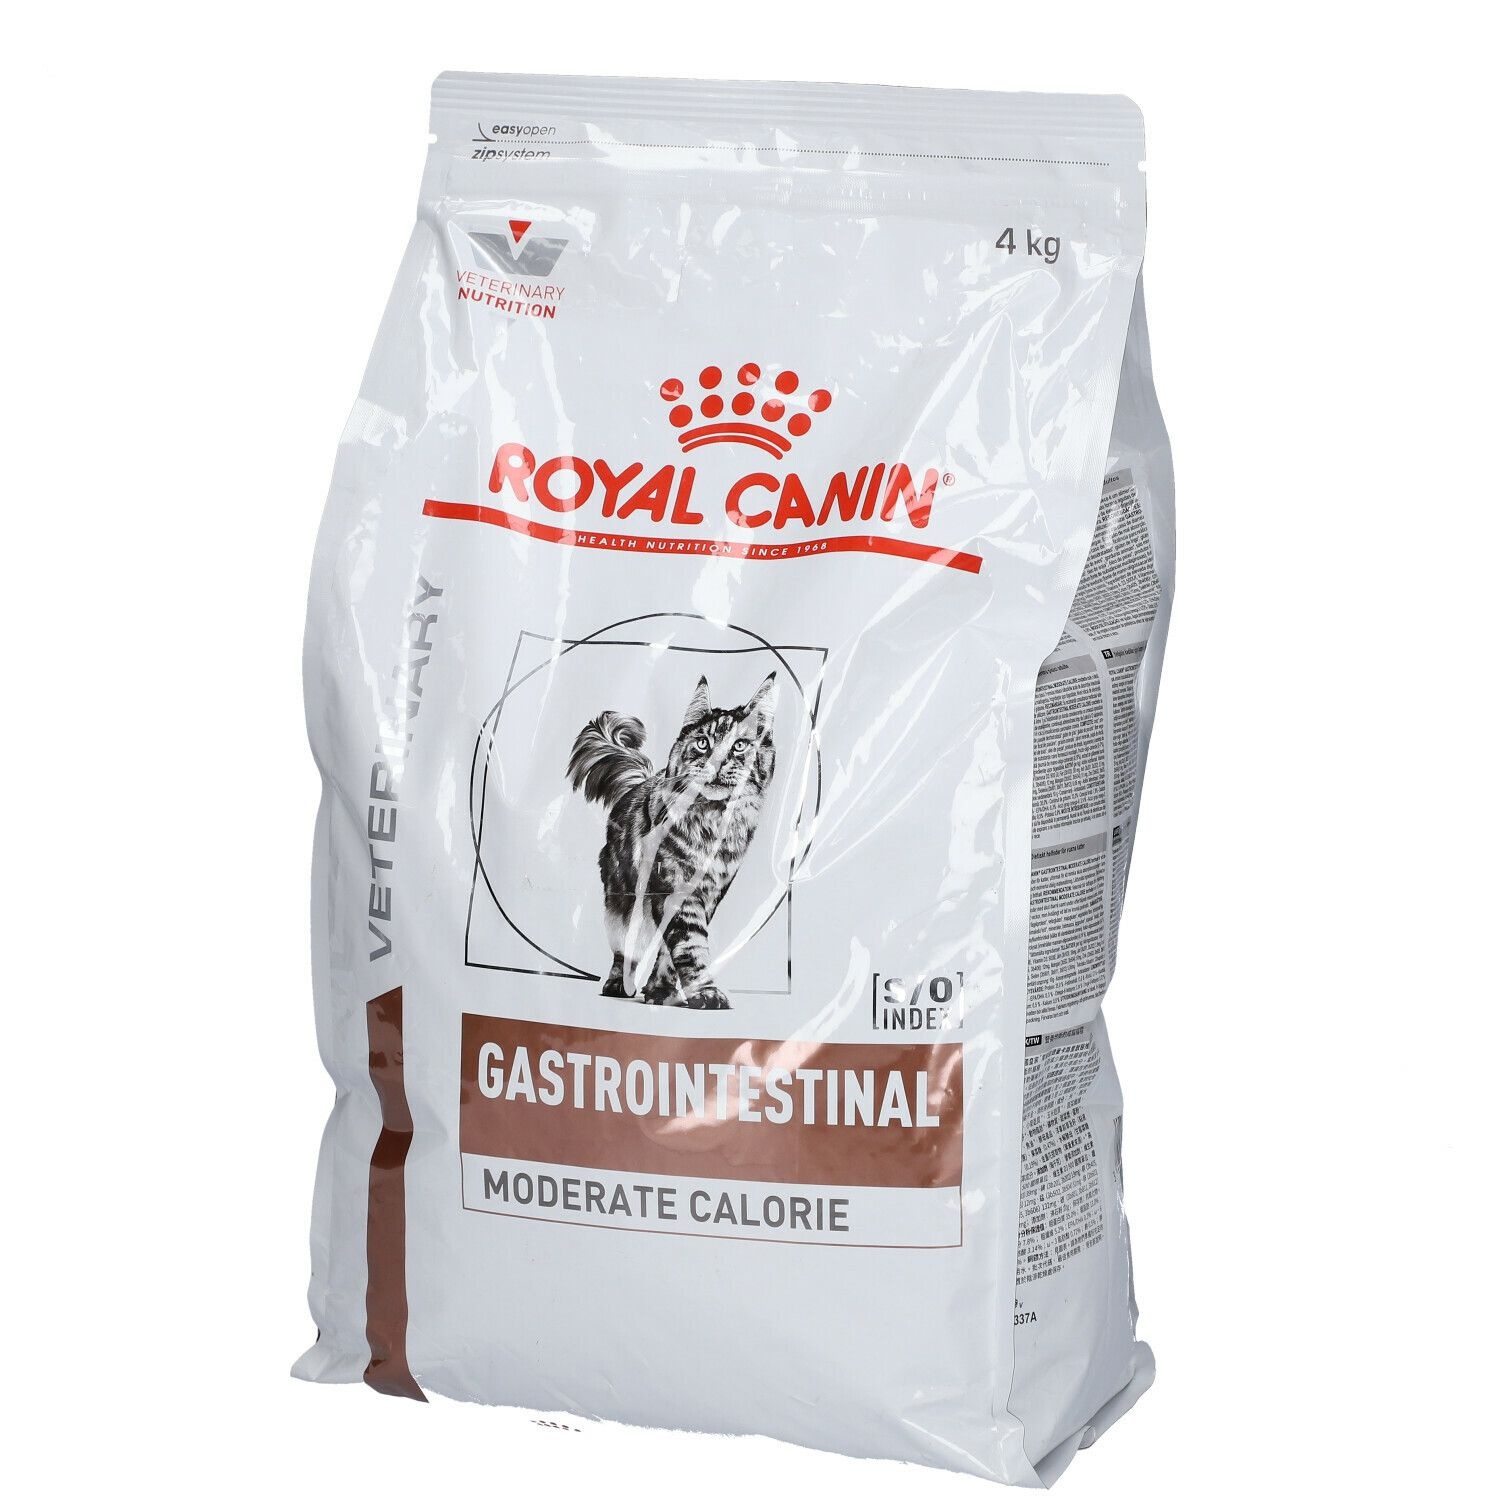 ROYAL CANIN® Gastrointestinal Moderate Calorie 4 kg pellet(s)